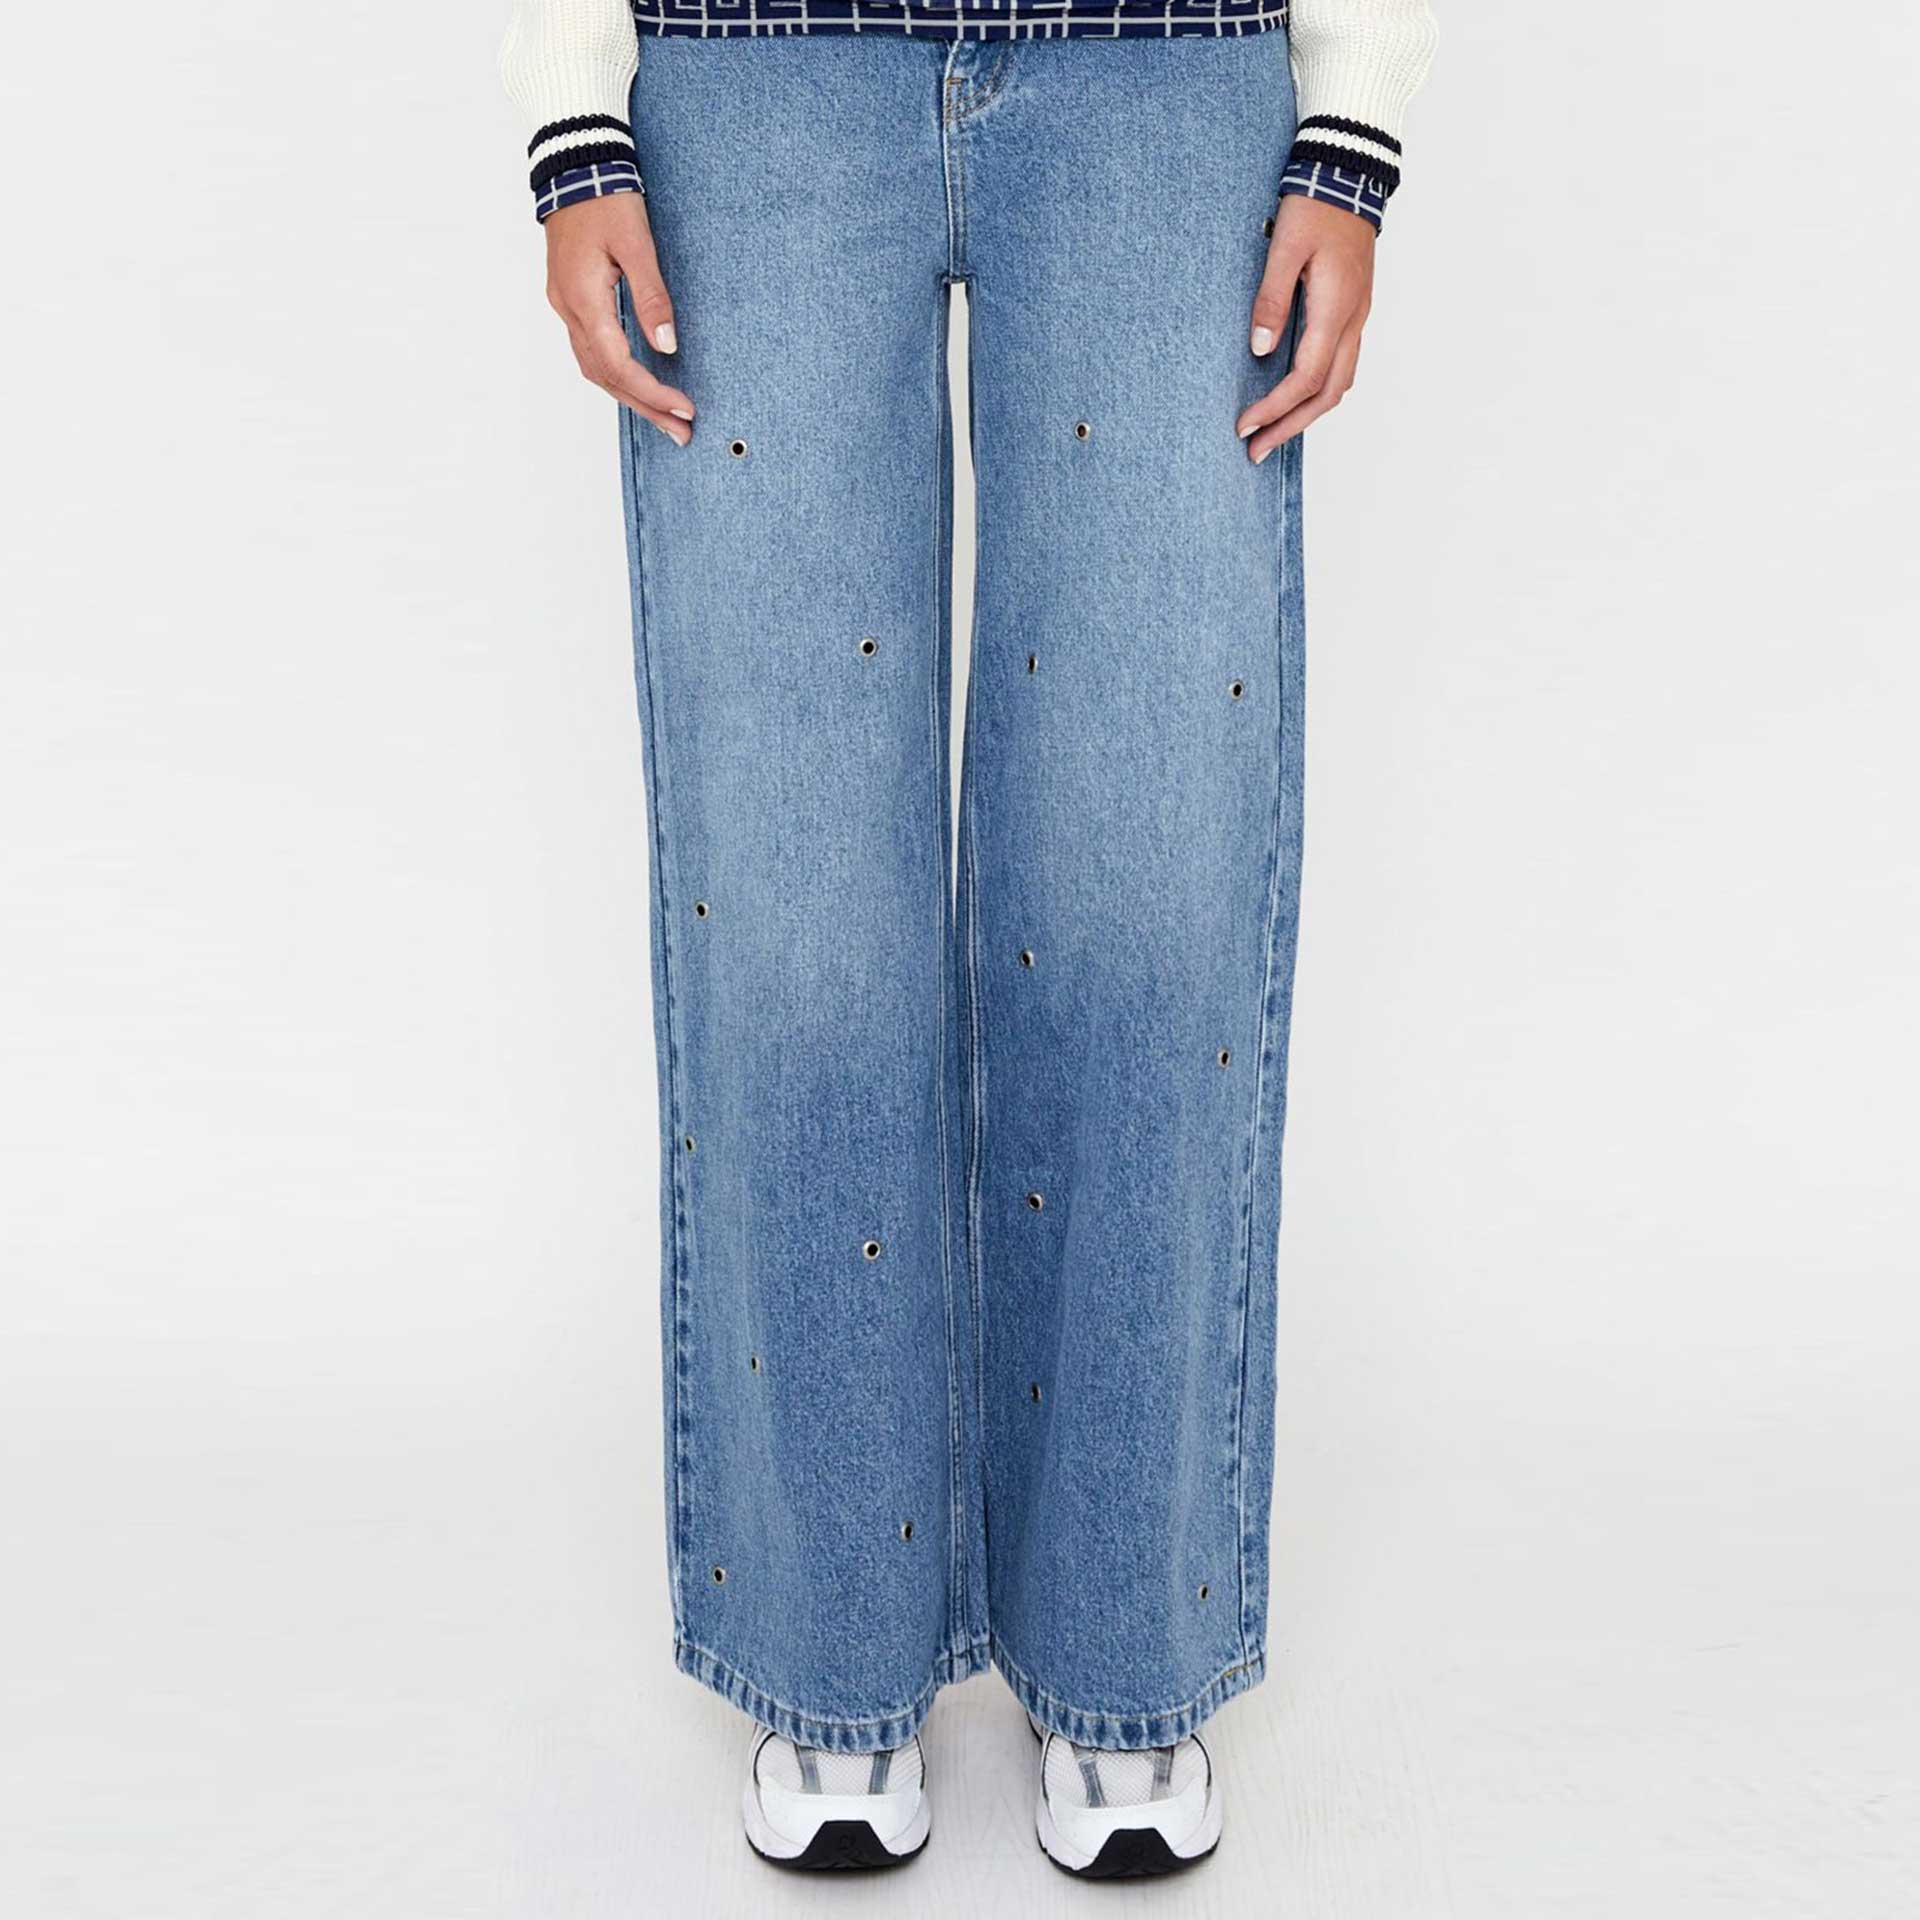 Jeans Brooklyn